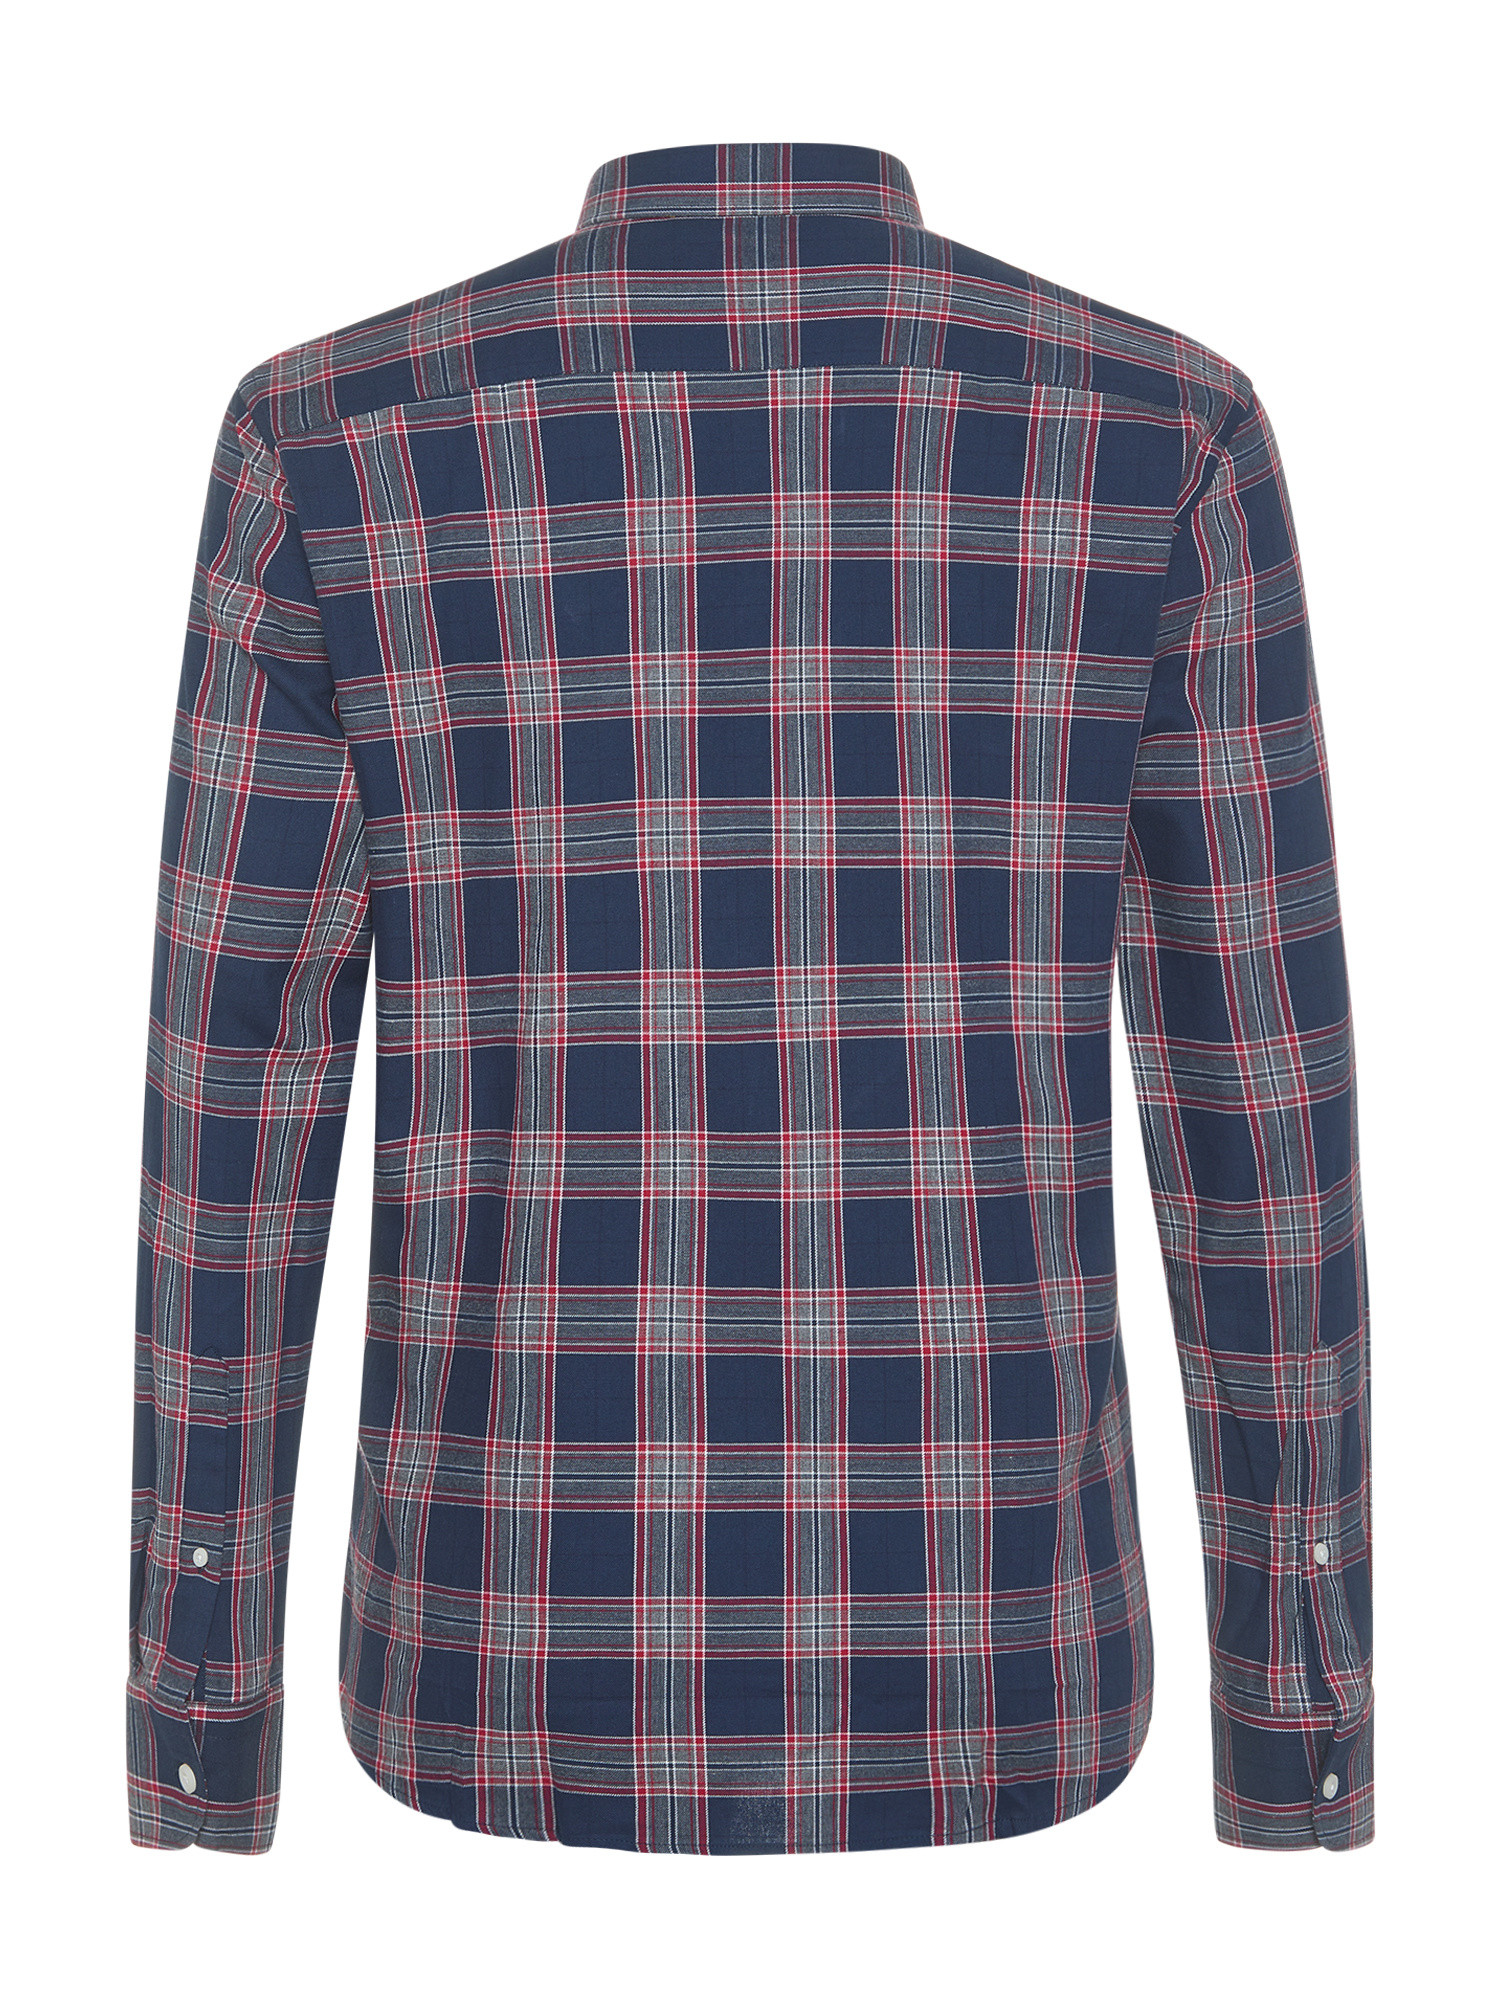 Luca D'Altieri - Tailor fit shirt in pure cotton flannel, Blue, large image number 1